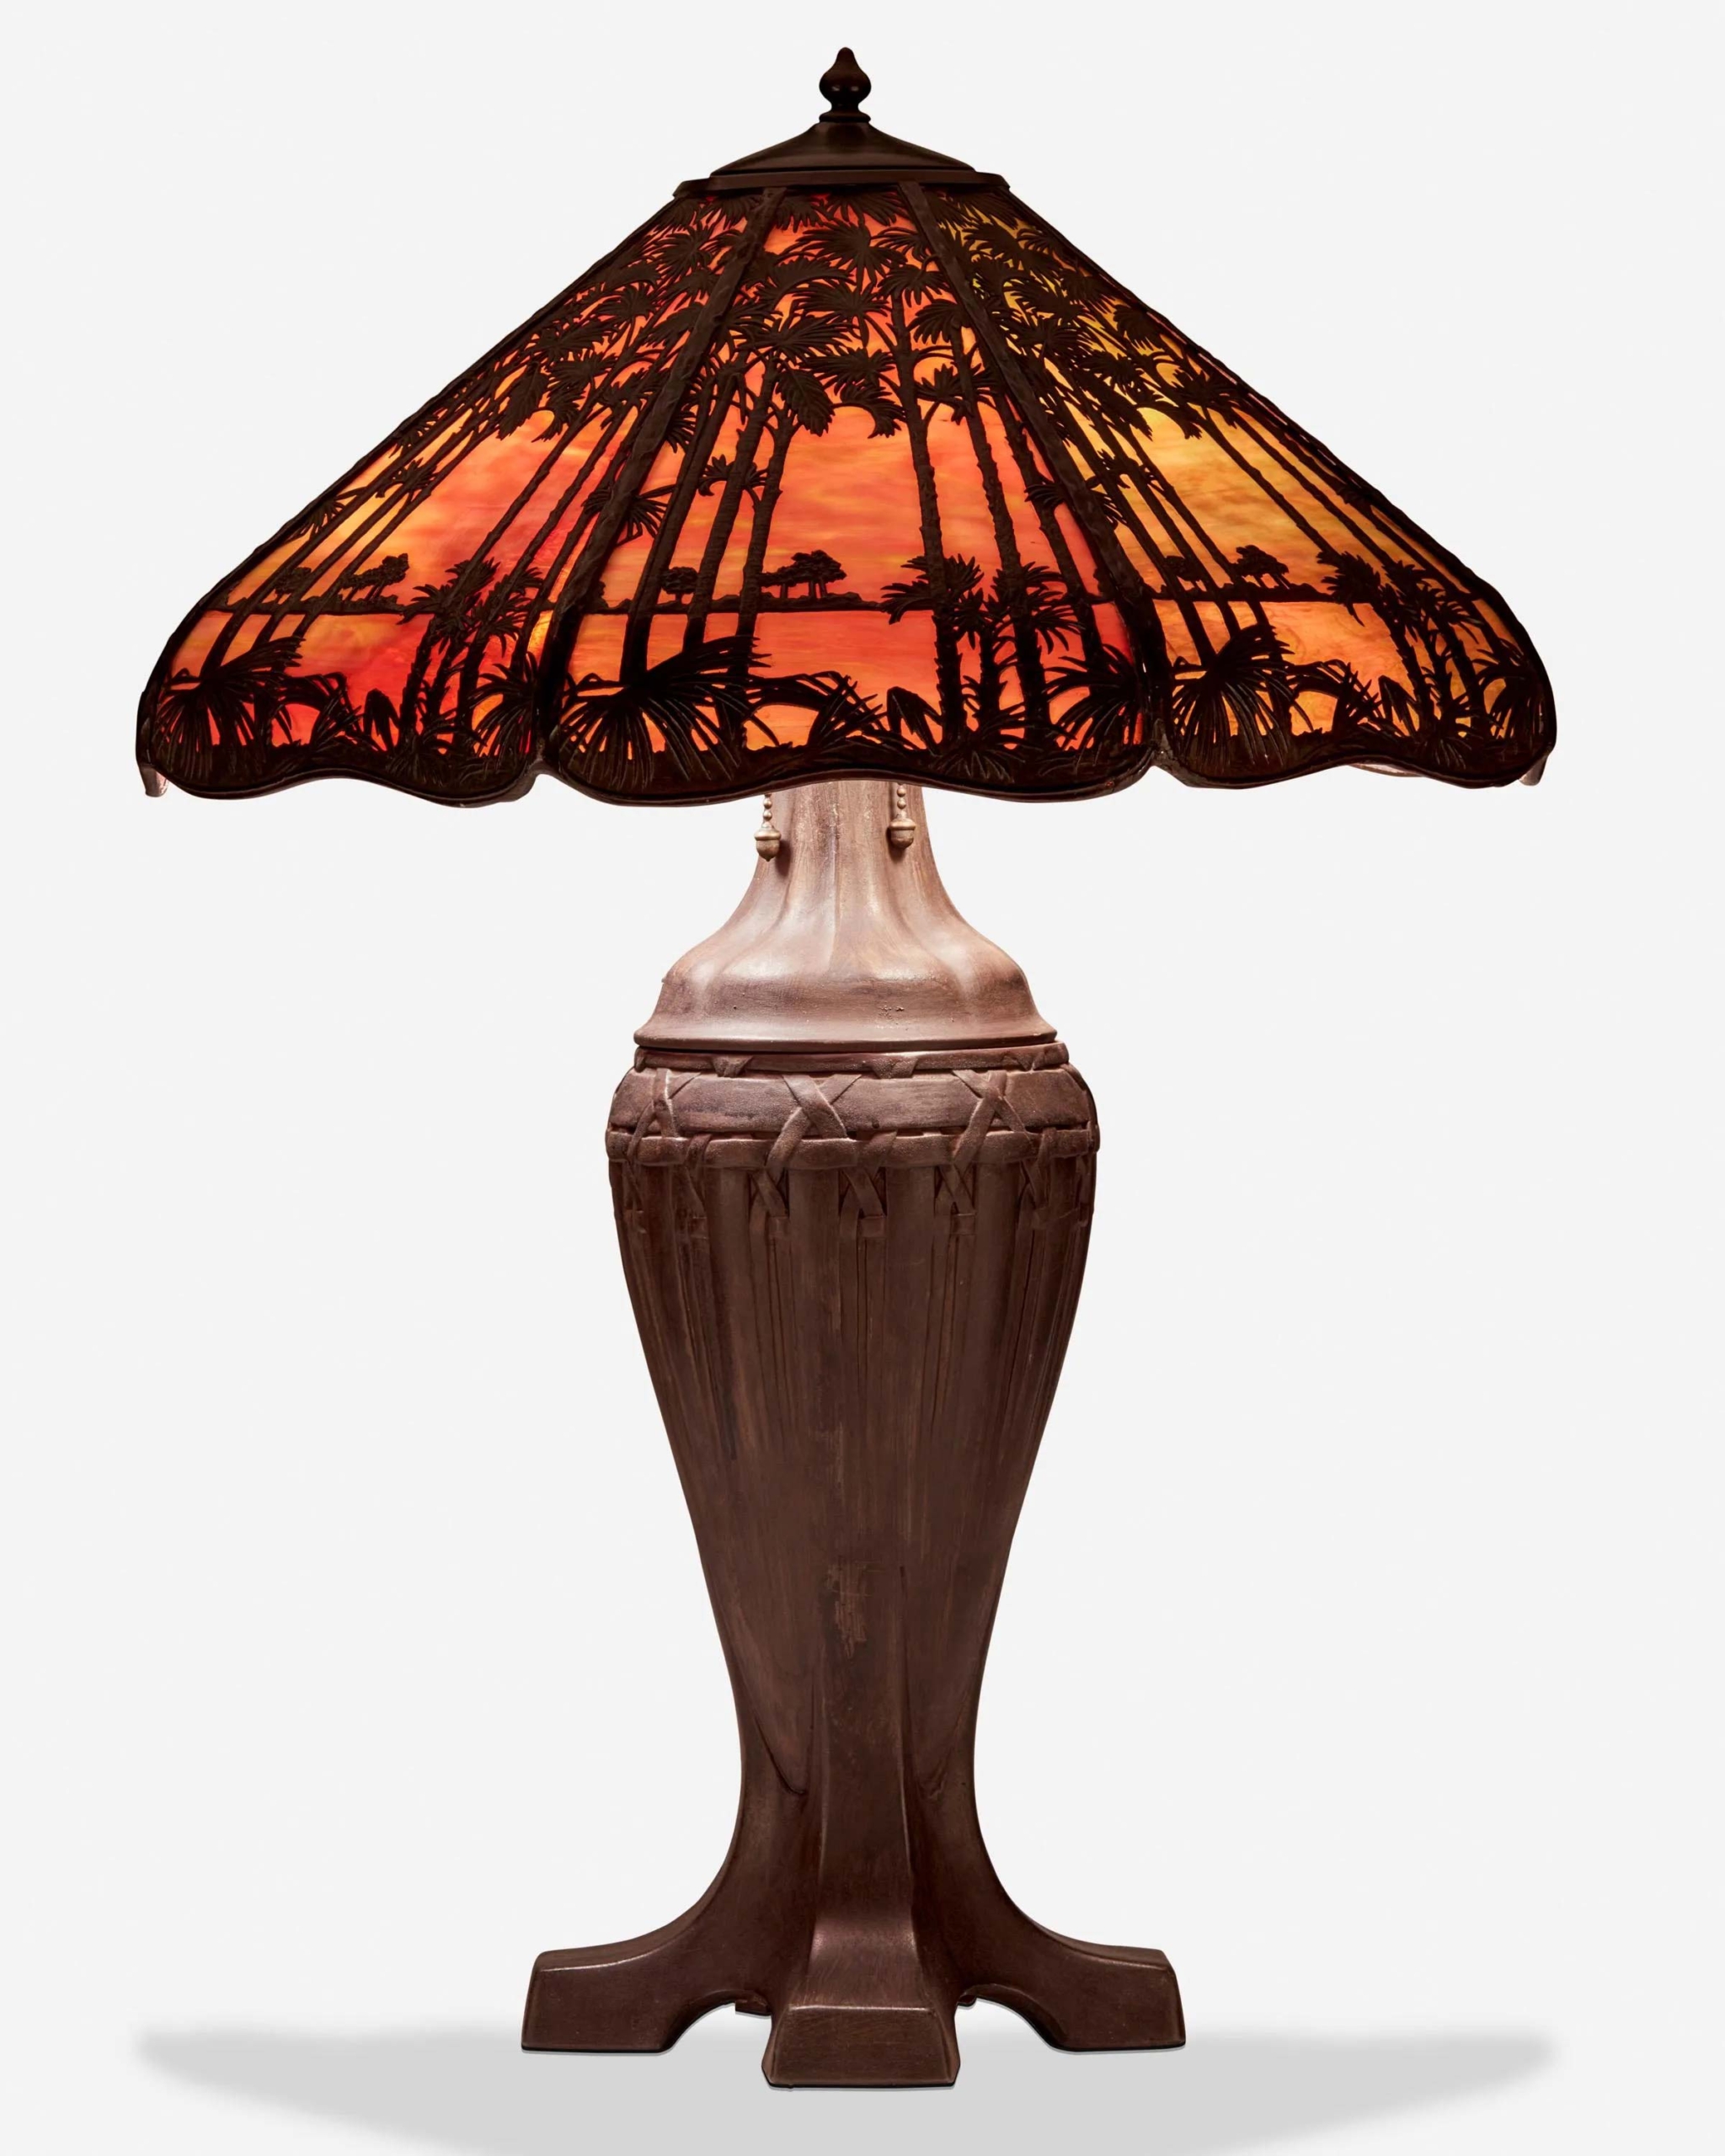 Handel Teroca Palm Tree and Sunset table lamp, $1,500-$2,000. Image courtesy John Moran Auctioneers